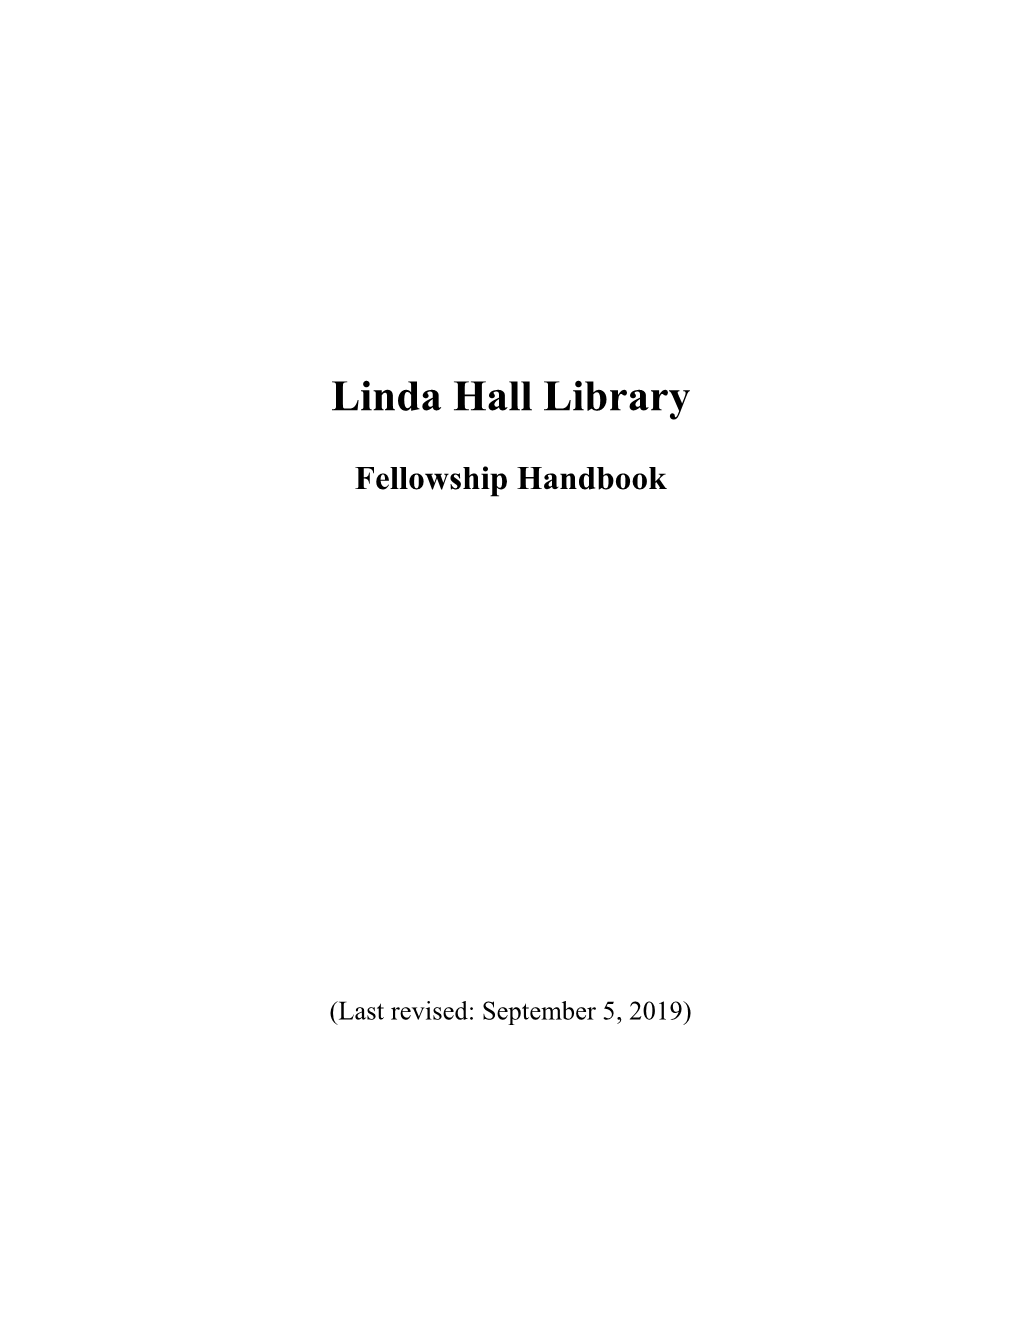 Fellowship Handbook